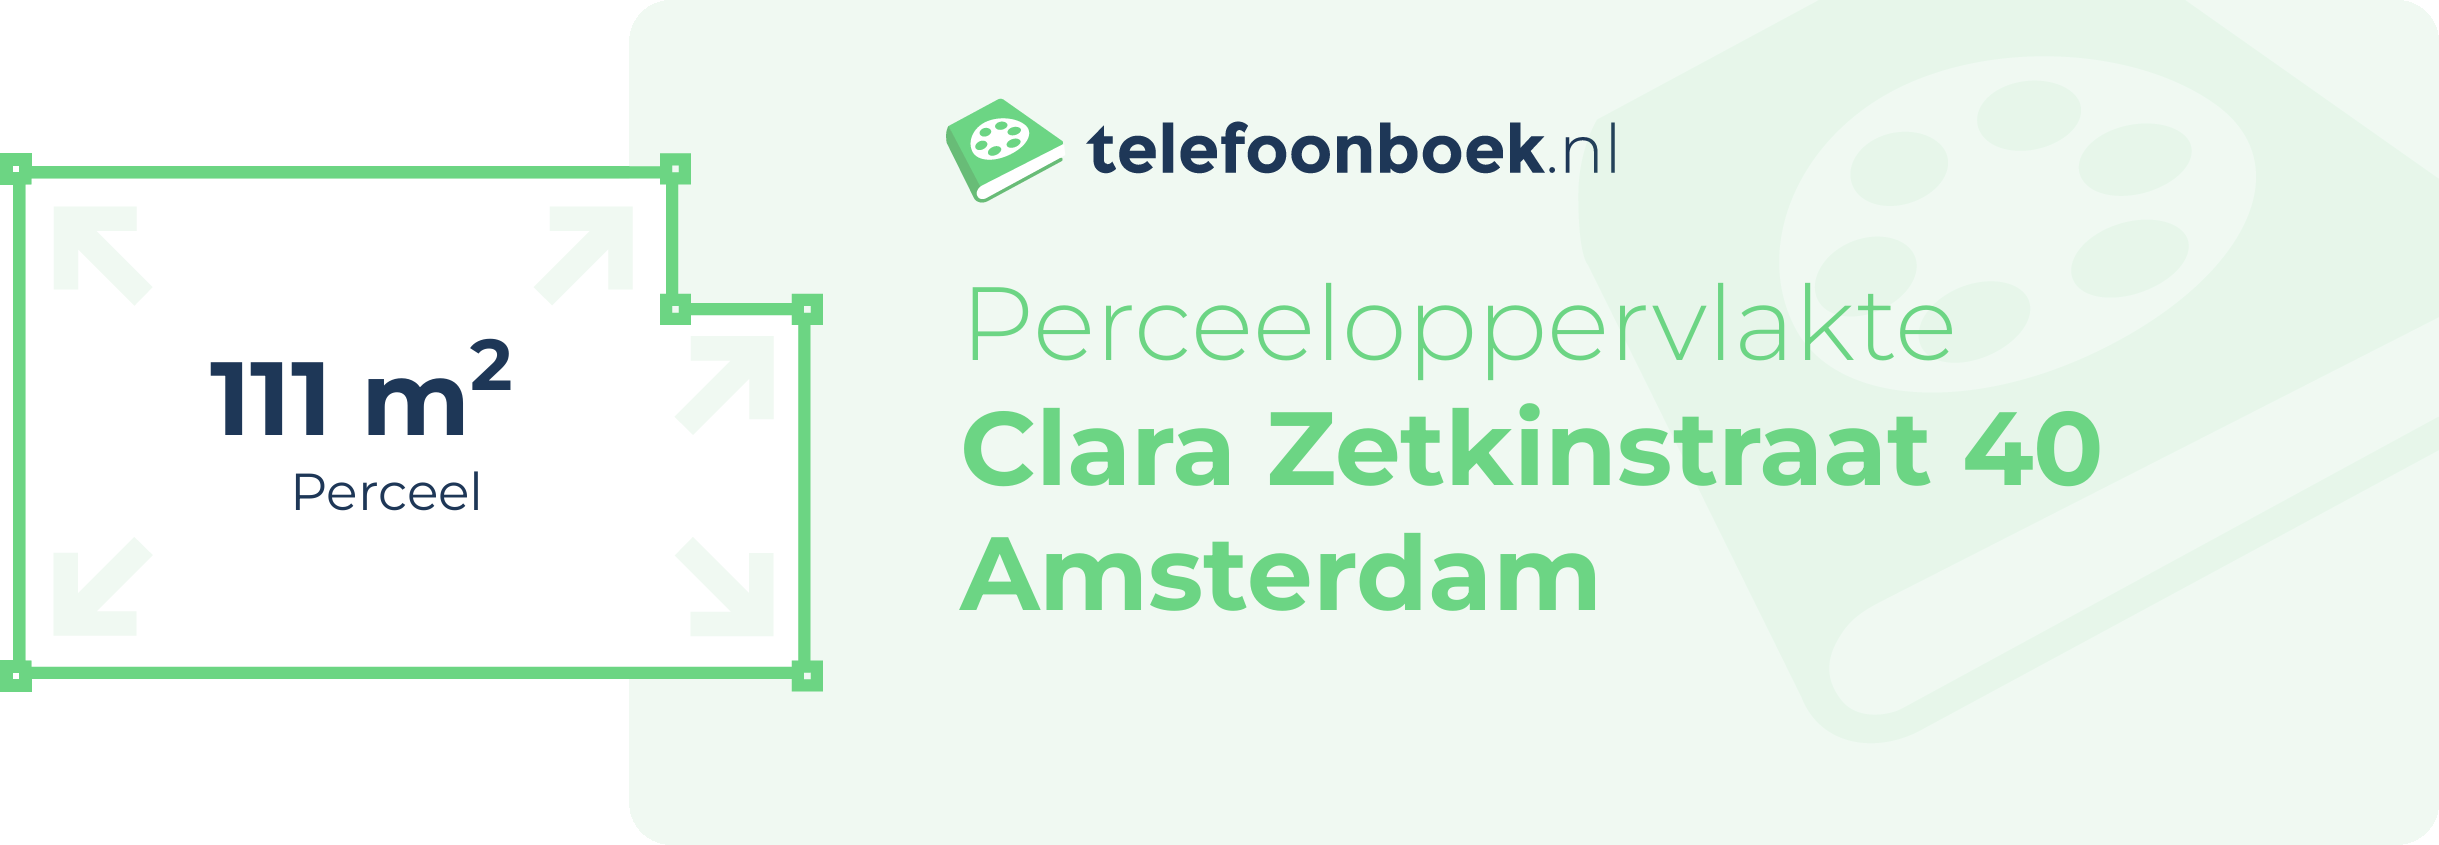 Perceeloppervlakte Clara Zetkinstraat 40 Amsterdam